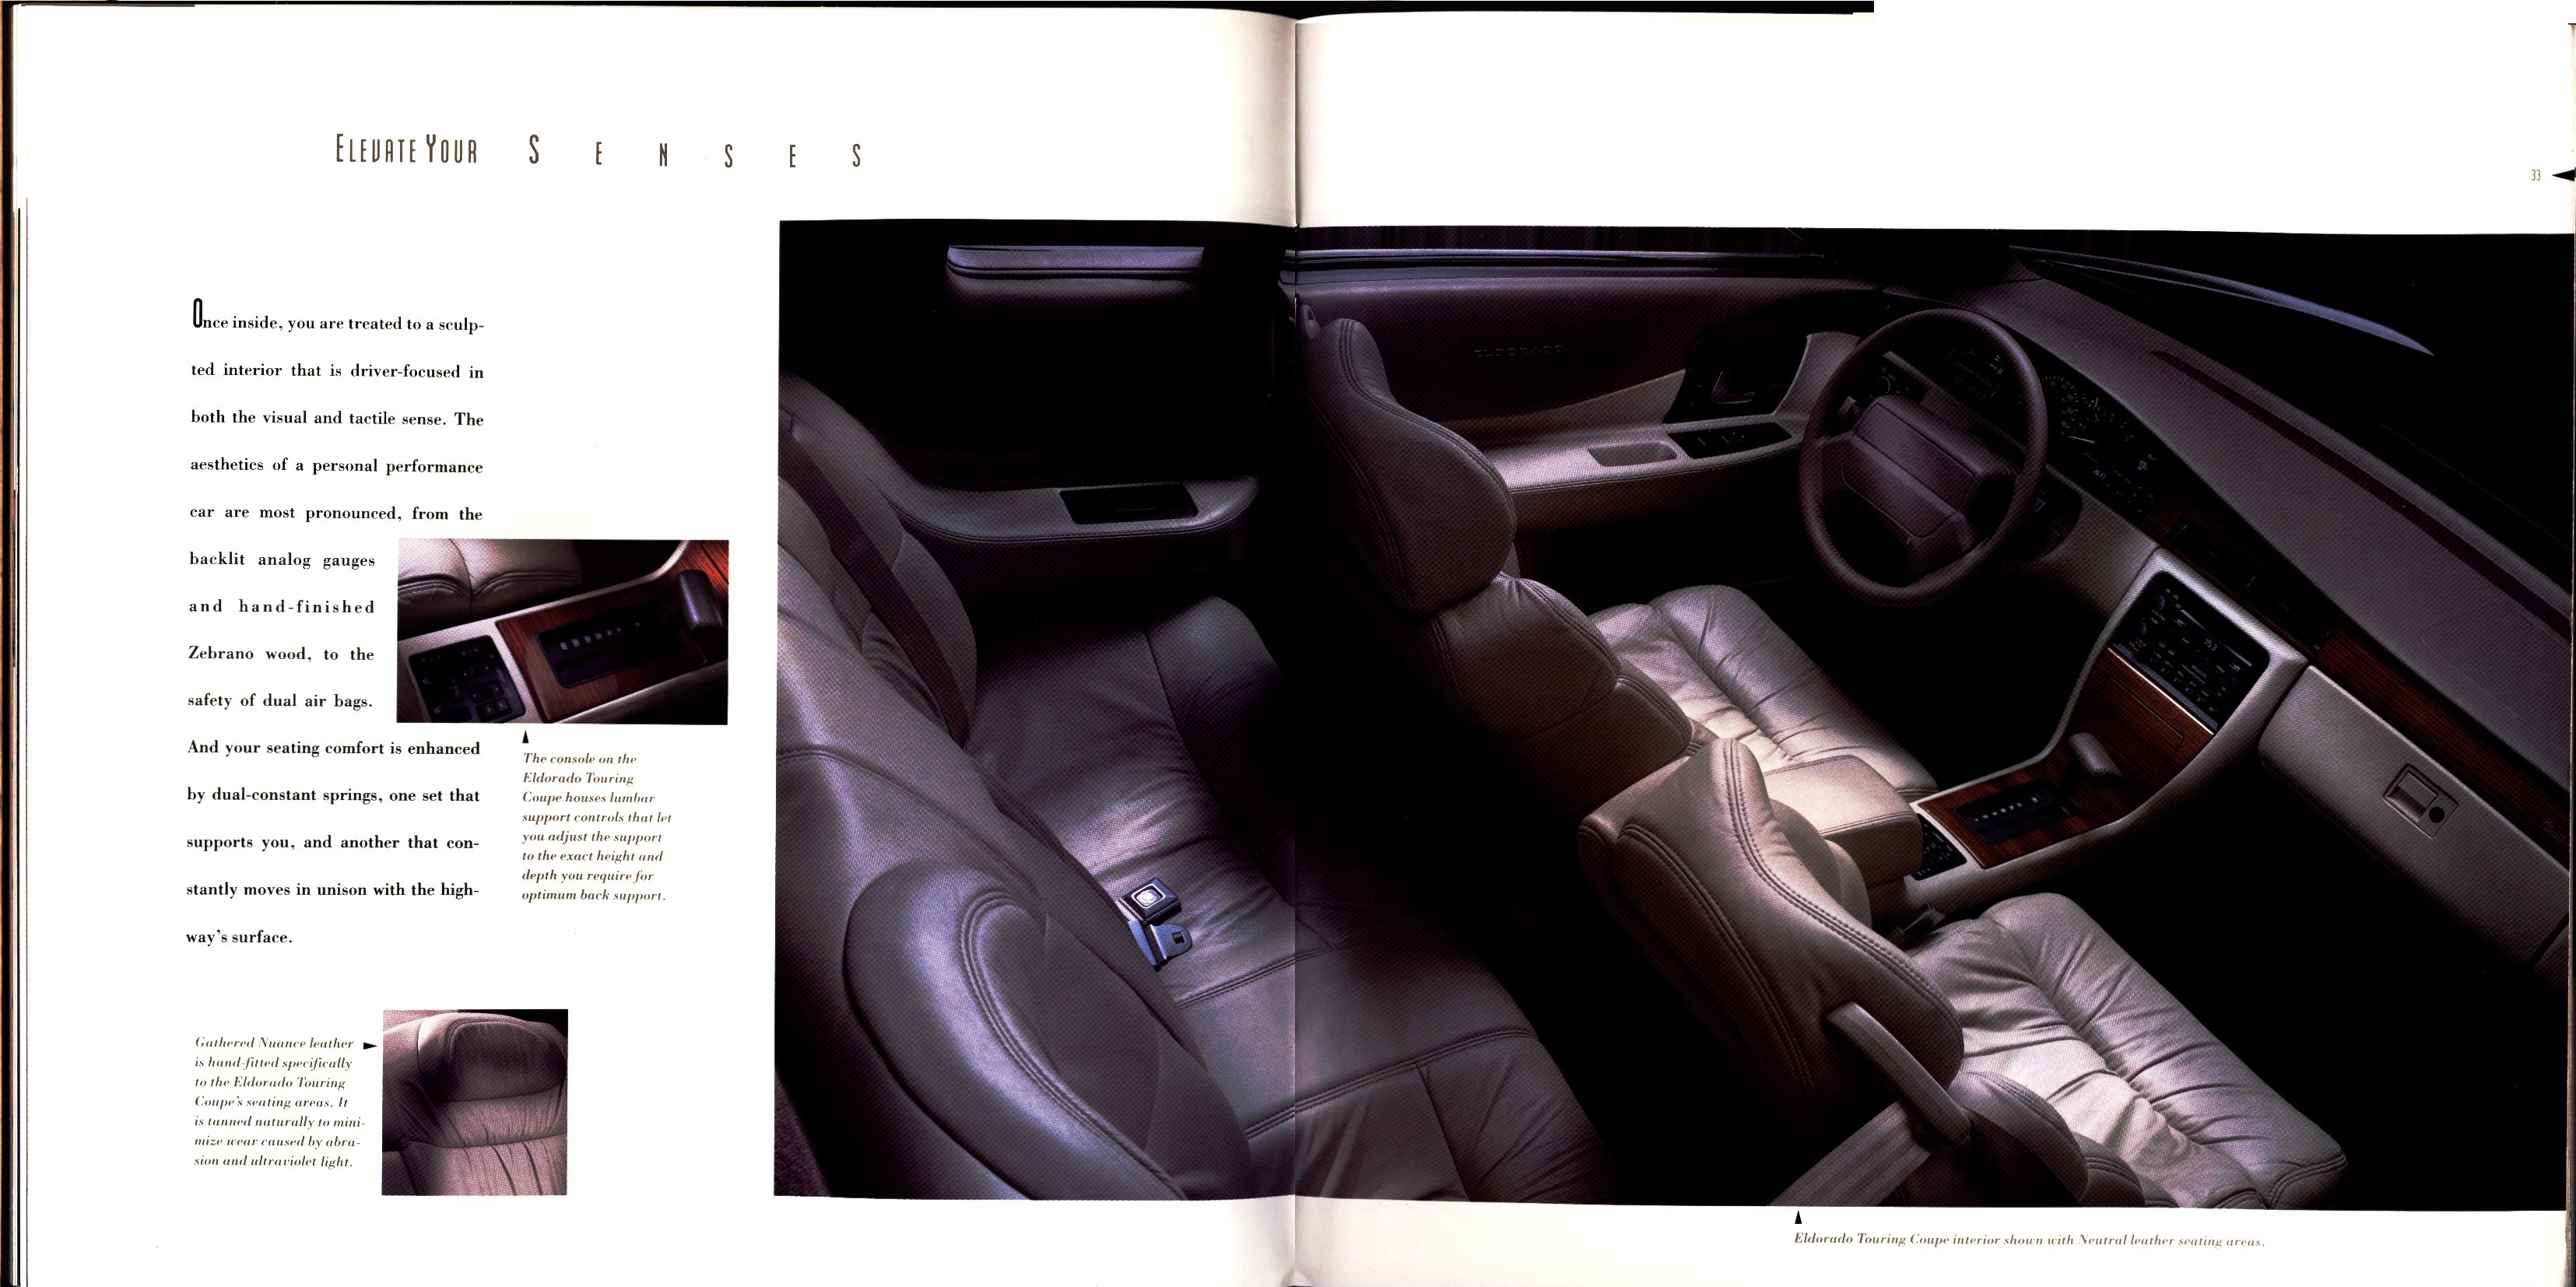 1993 Cadillac Full Line Prestige Brochure 32-33